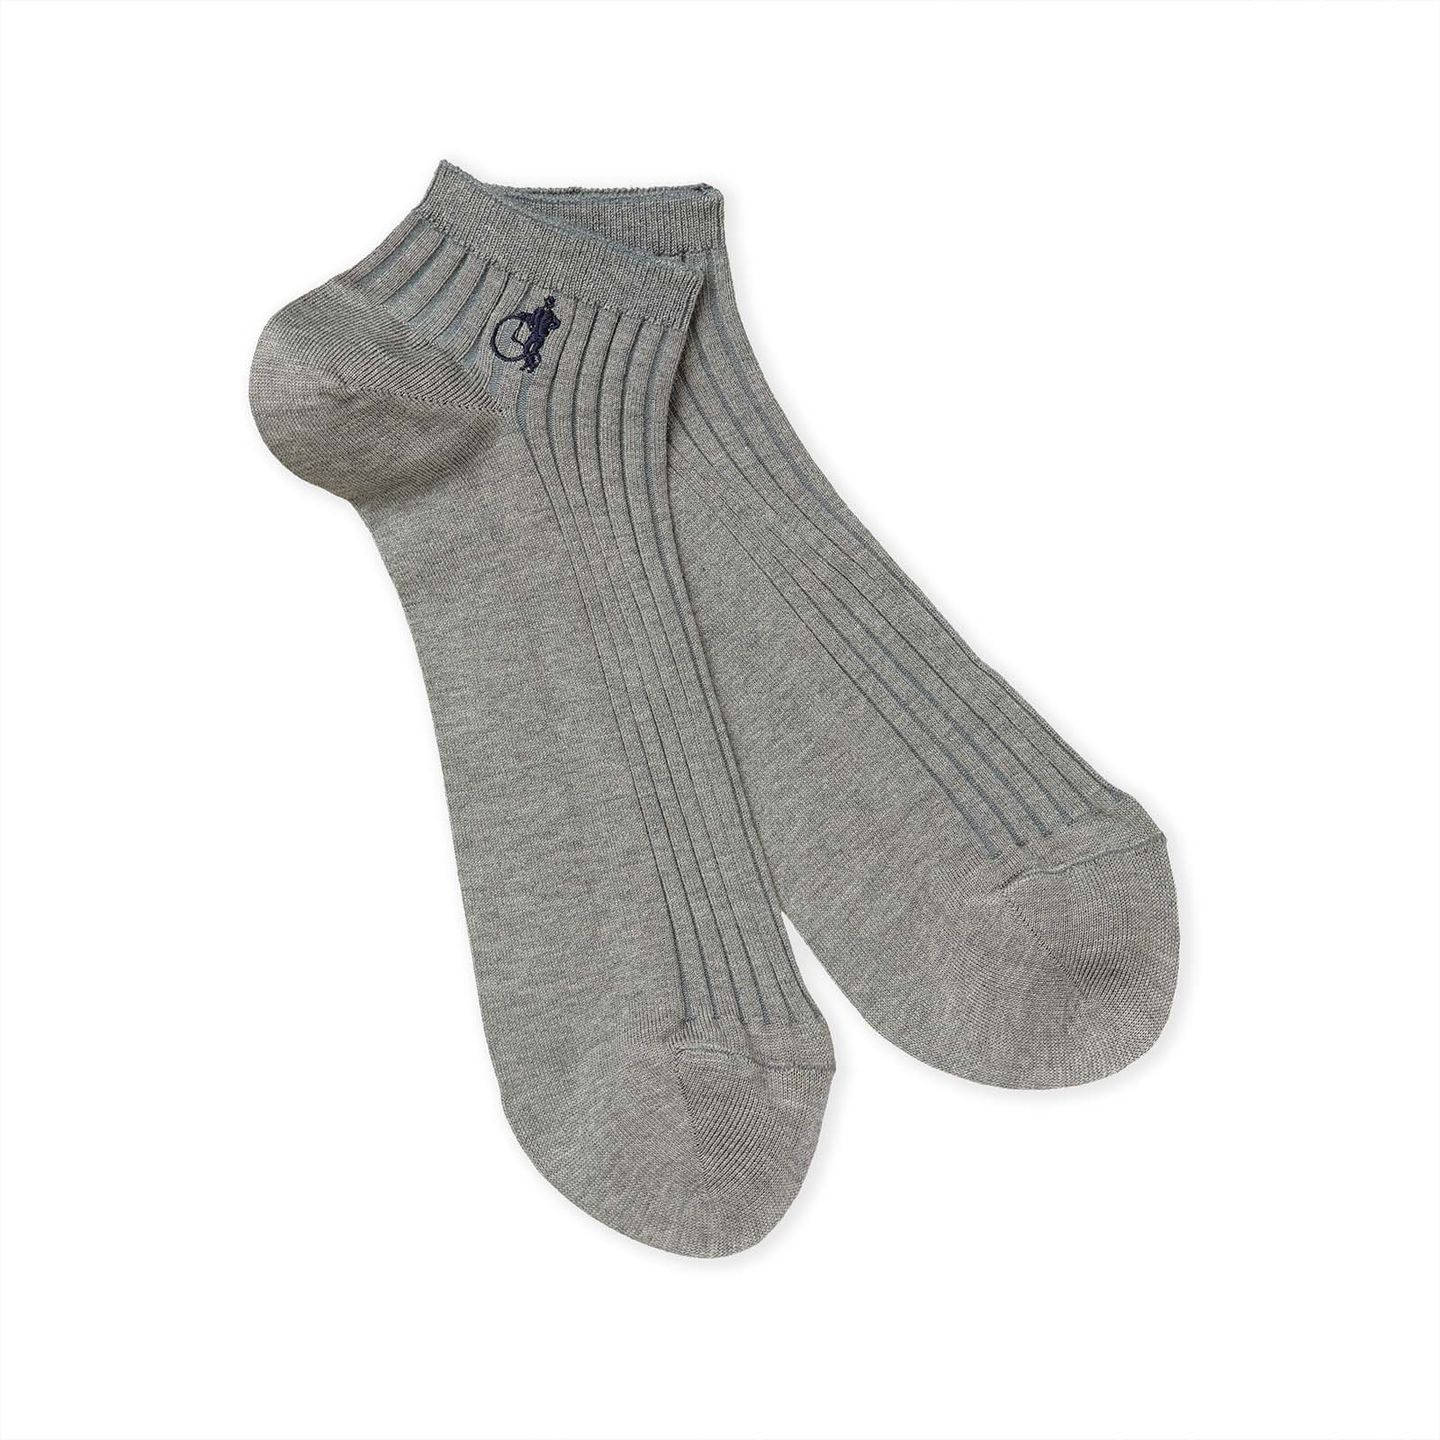 Trainer socks - London Sock Company